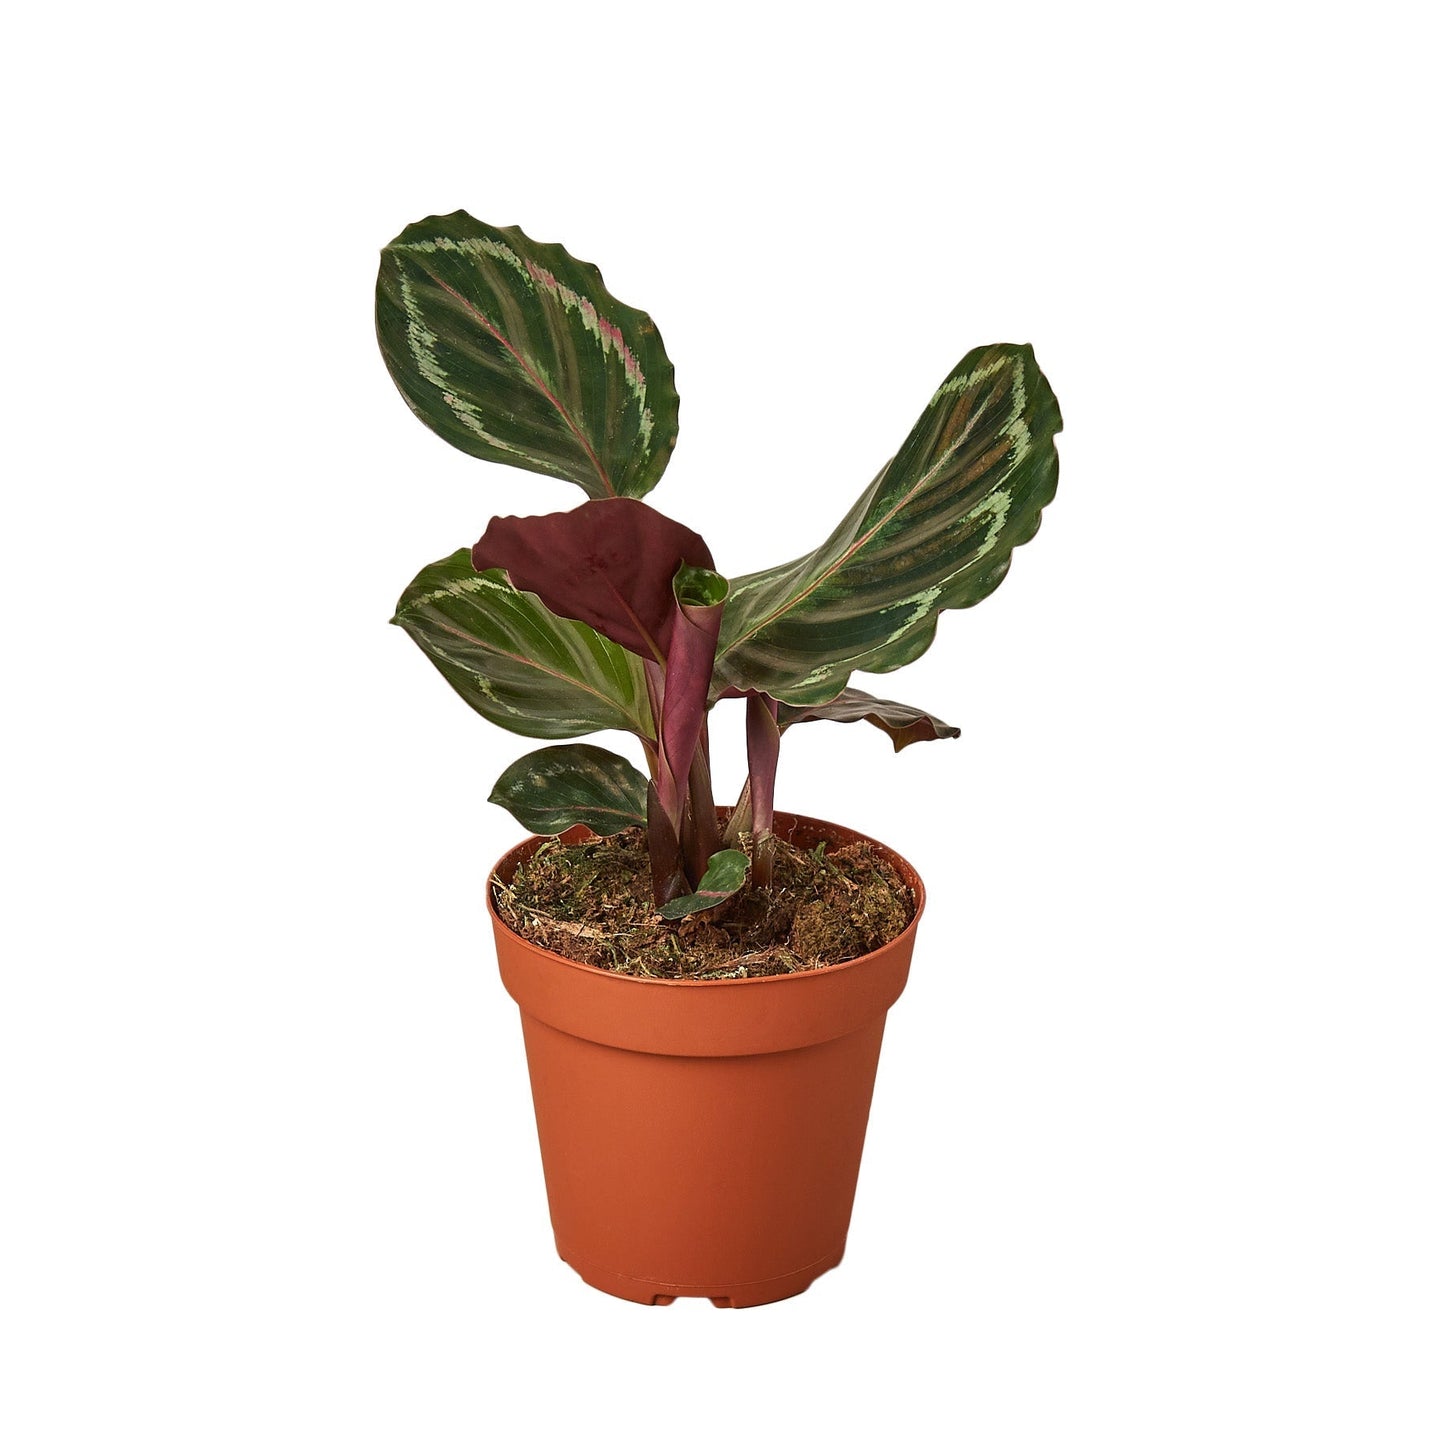 Calathea Roseopicta 'Medallion' - 6" Pot - NURSERY POT ONLY - One Beleaf Away Plant Studio